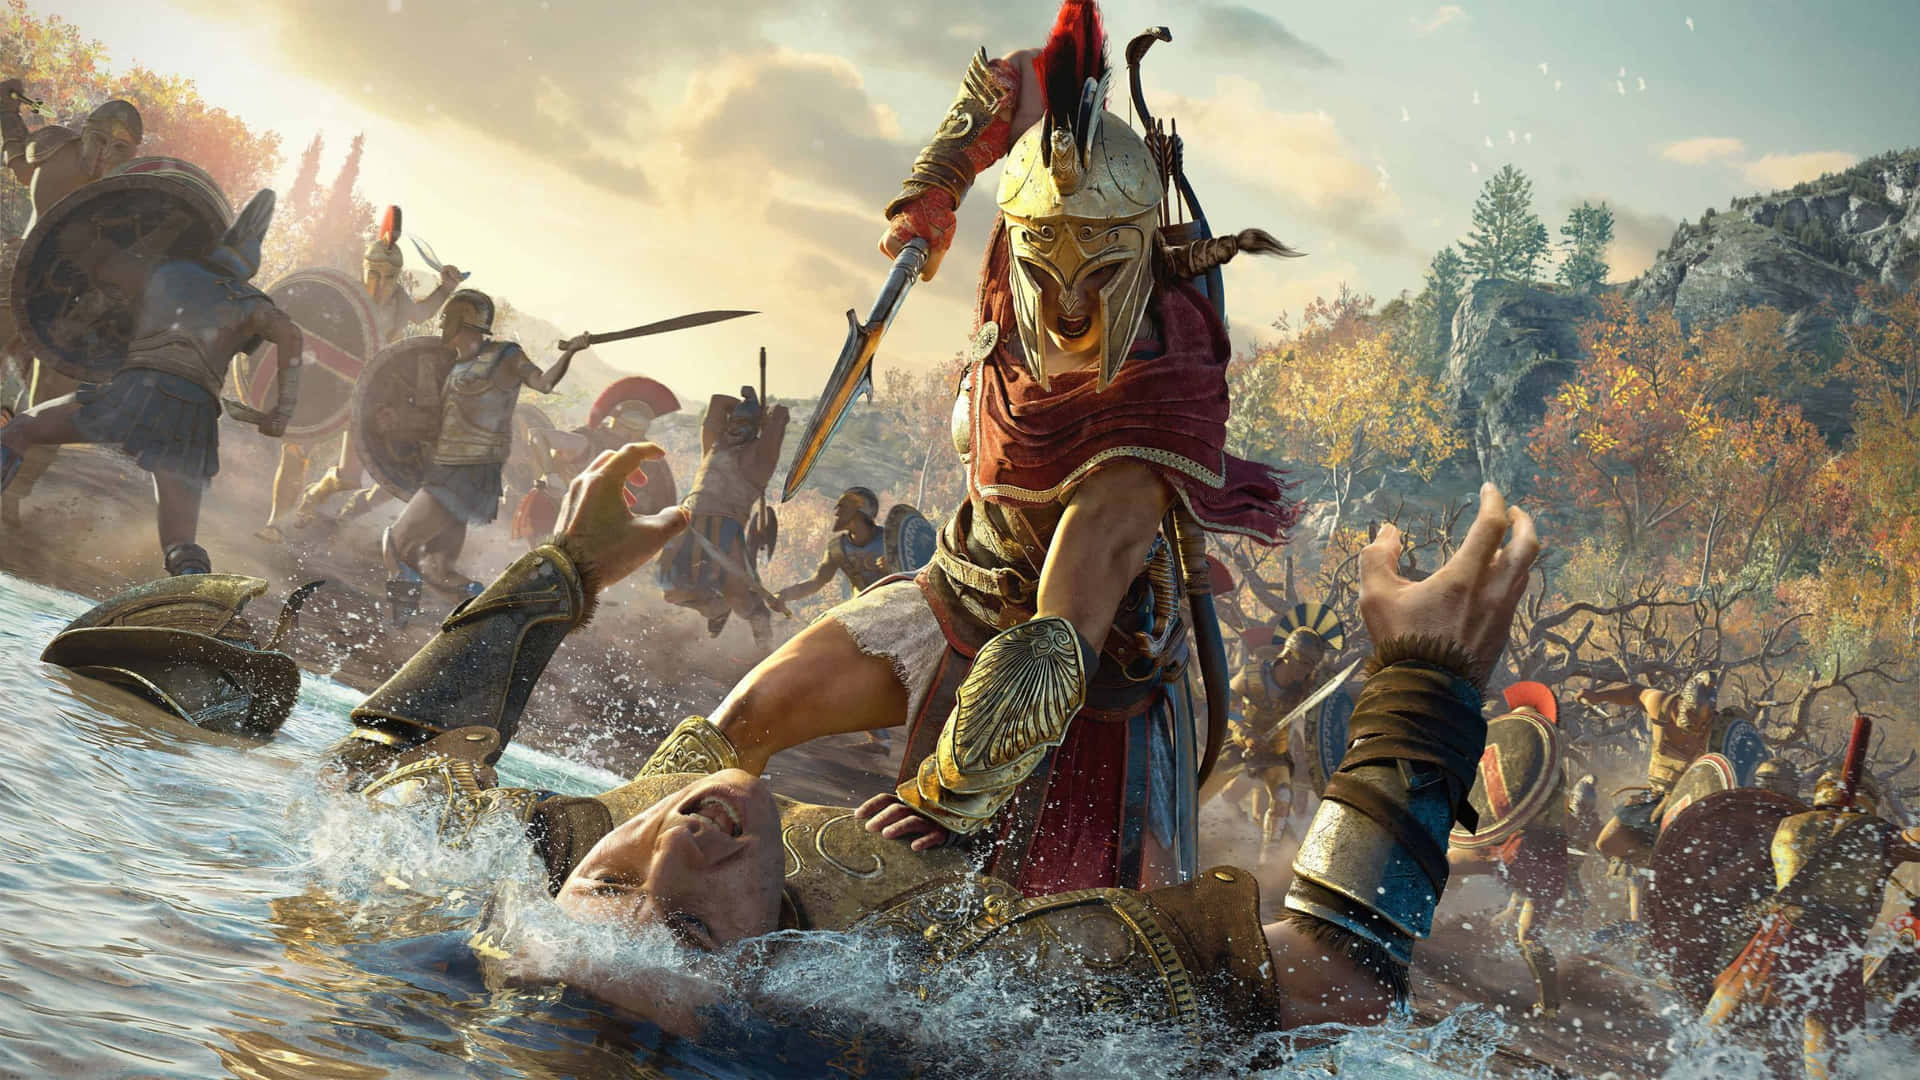 Alexiosdeimos 1440p Bakgrund Till Assassin's Creed Odyssey